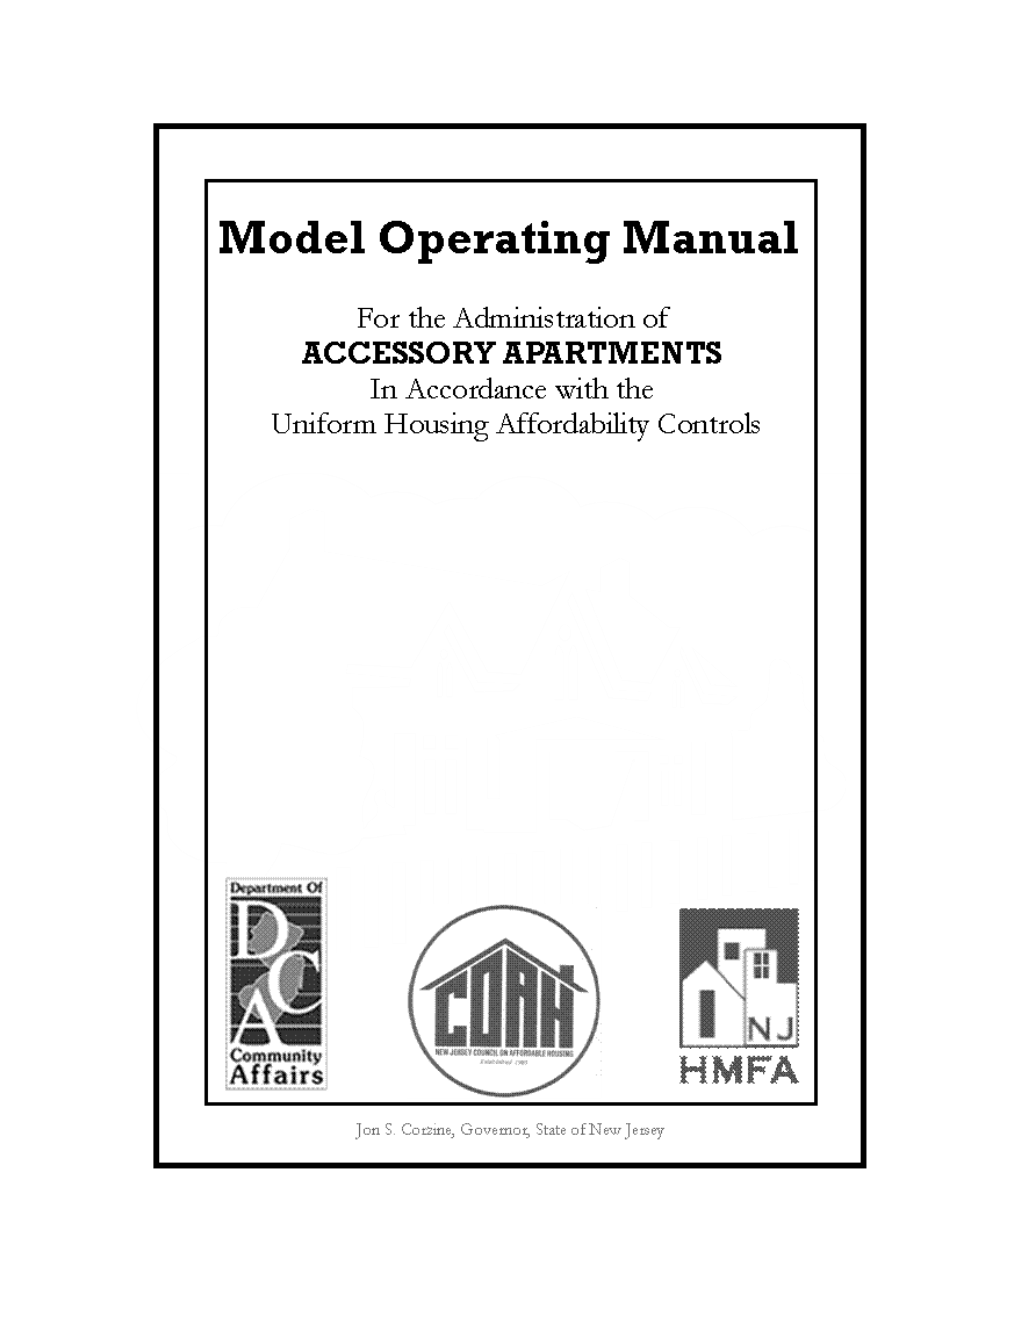 Accessory Apartment Operating Manual Checklist